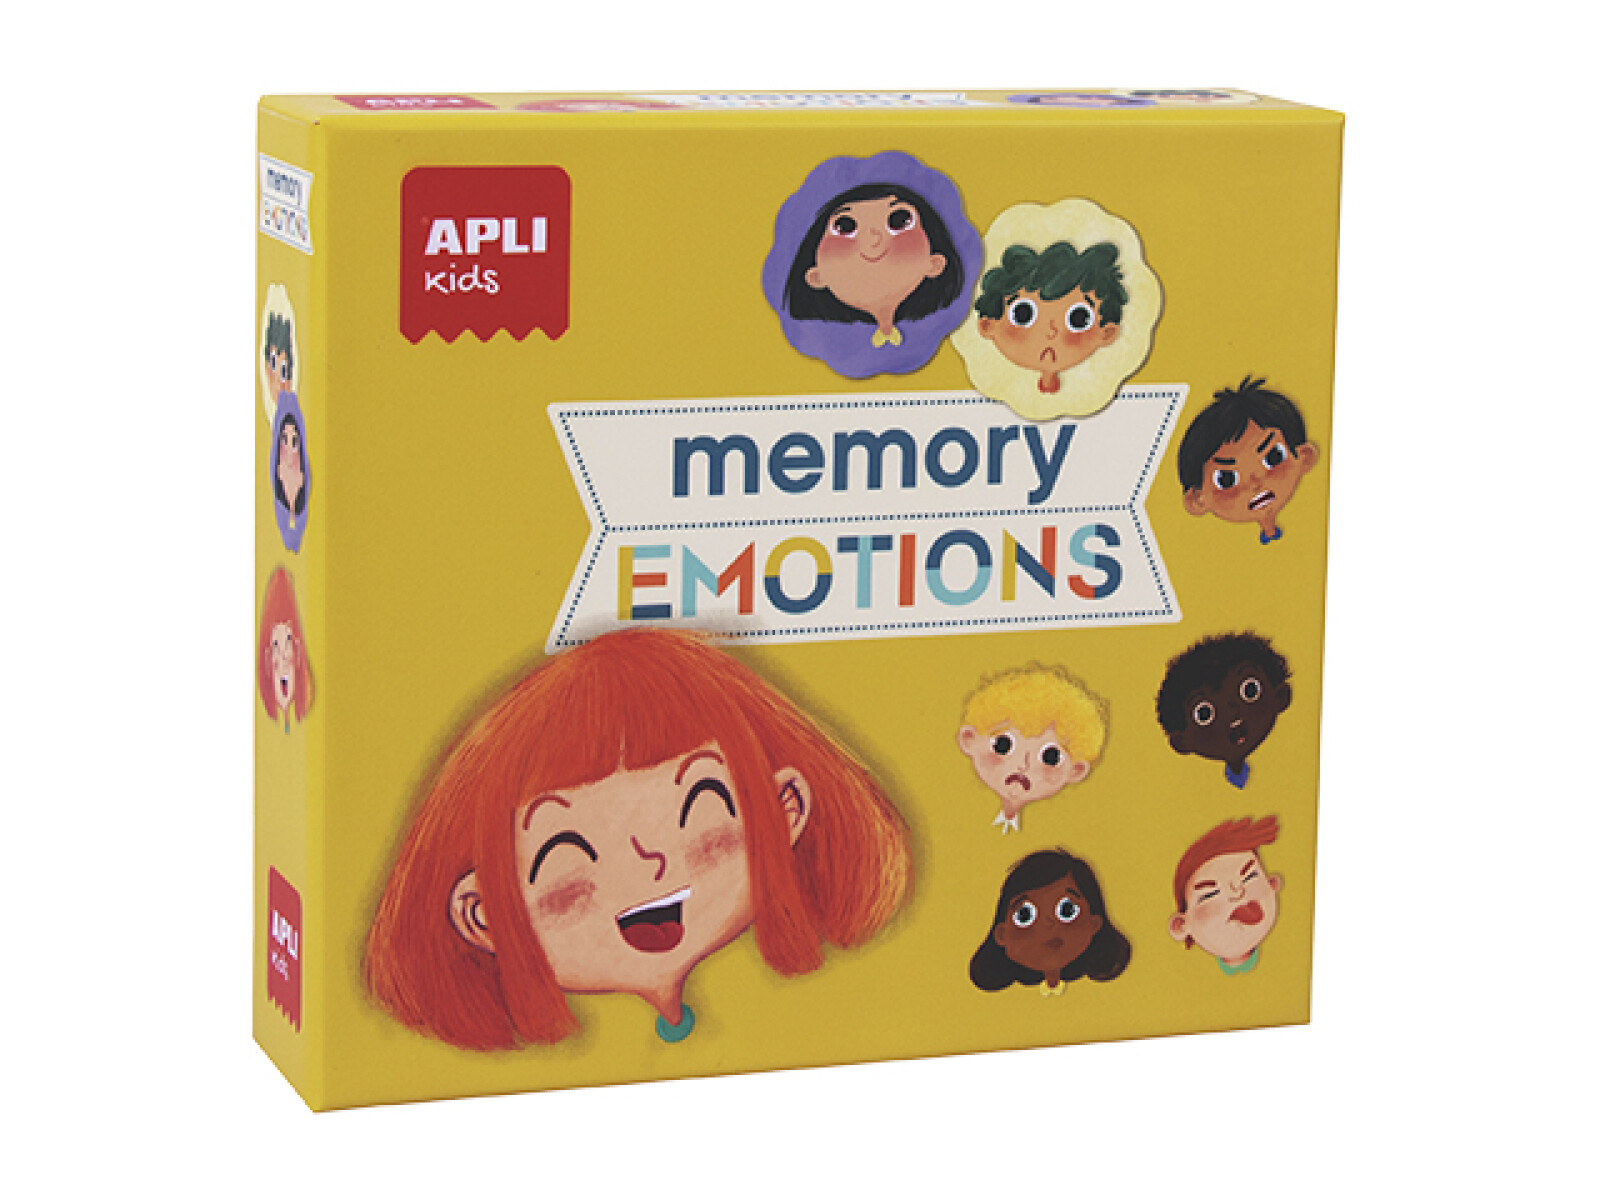 Memory emotions Expressions Apli 